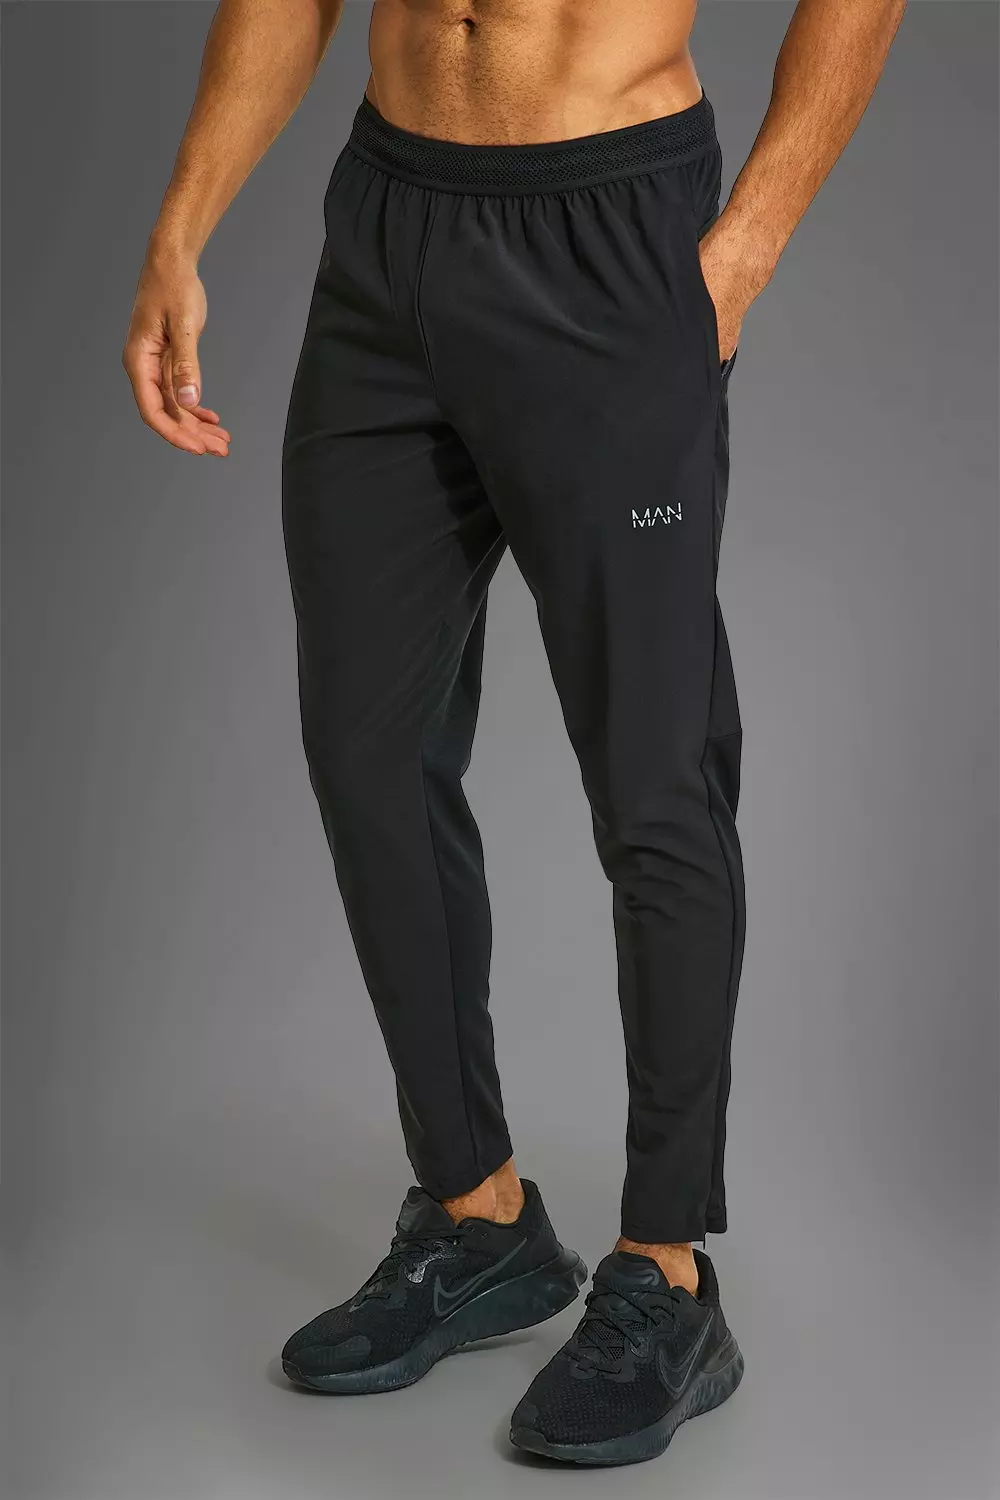 Man Active Gym Performance Sweatpants Zip Pockets Black